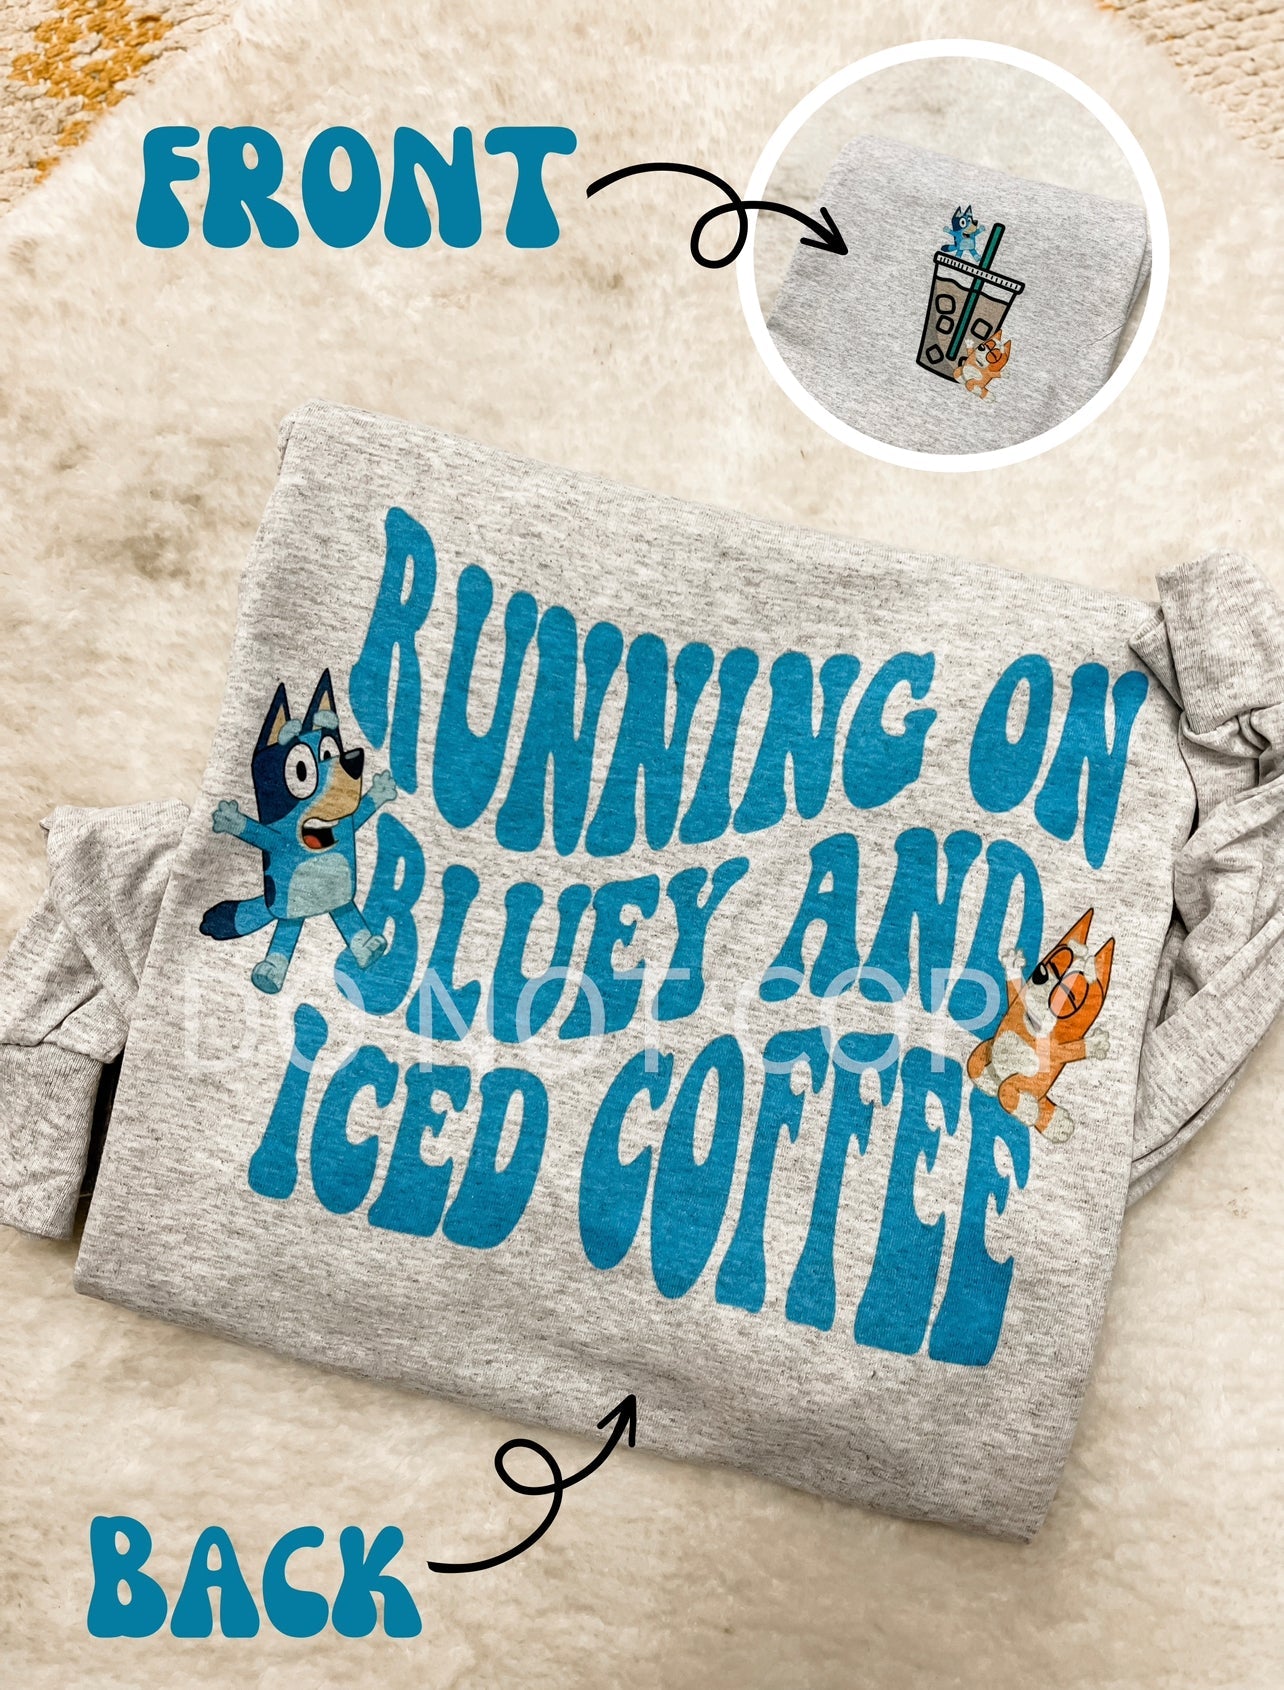 Running On Bluey And Iced Coffee Mugs